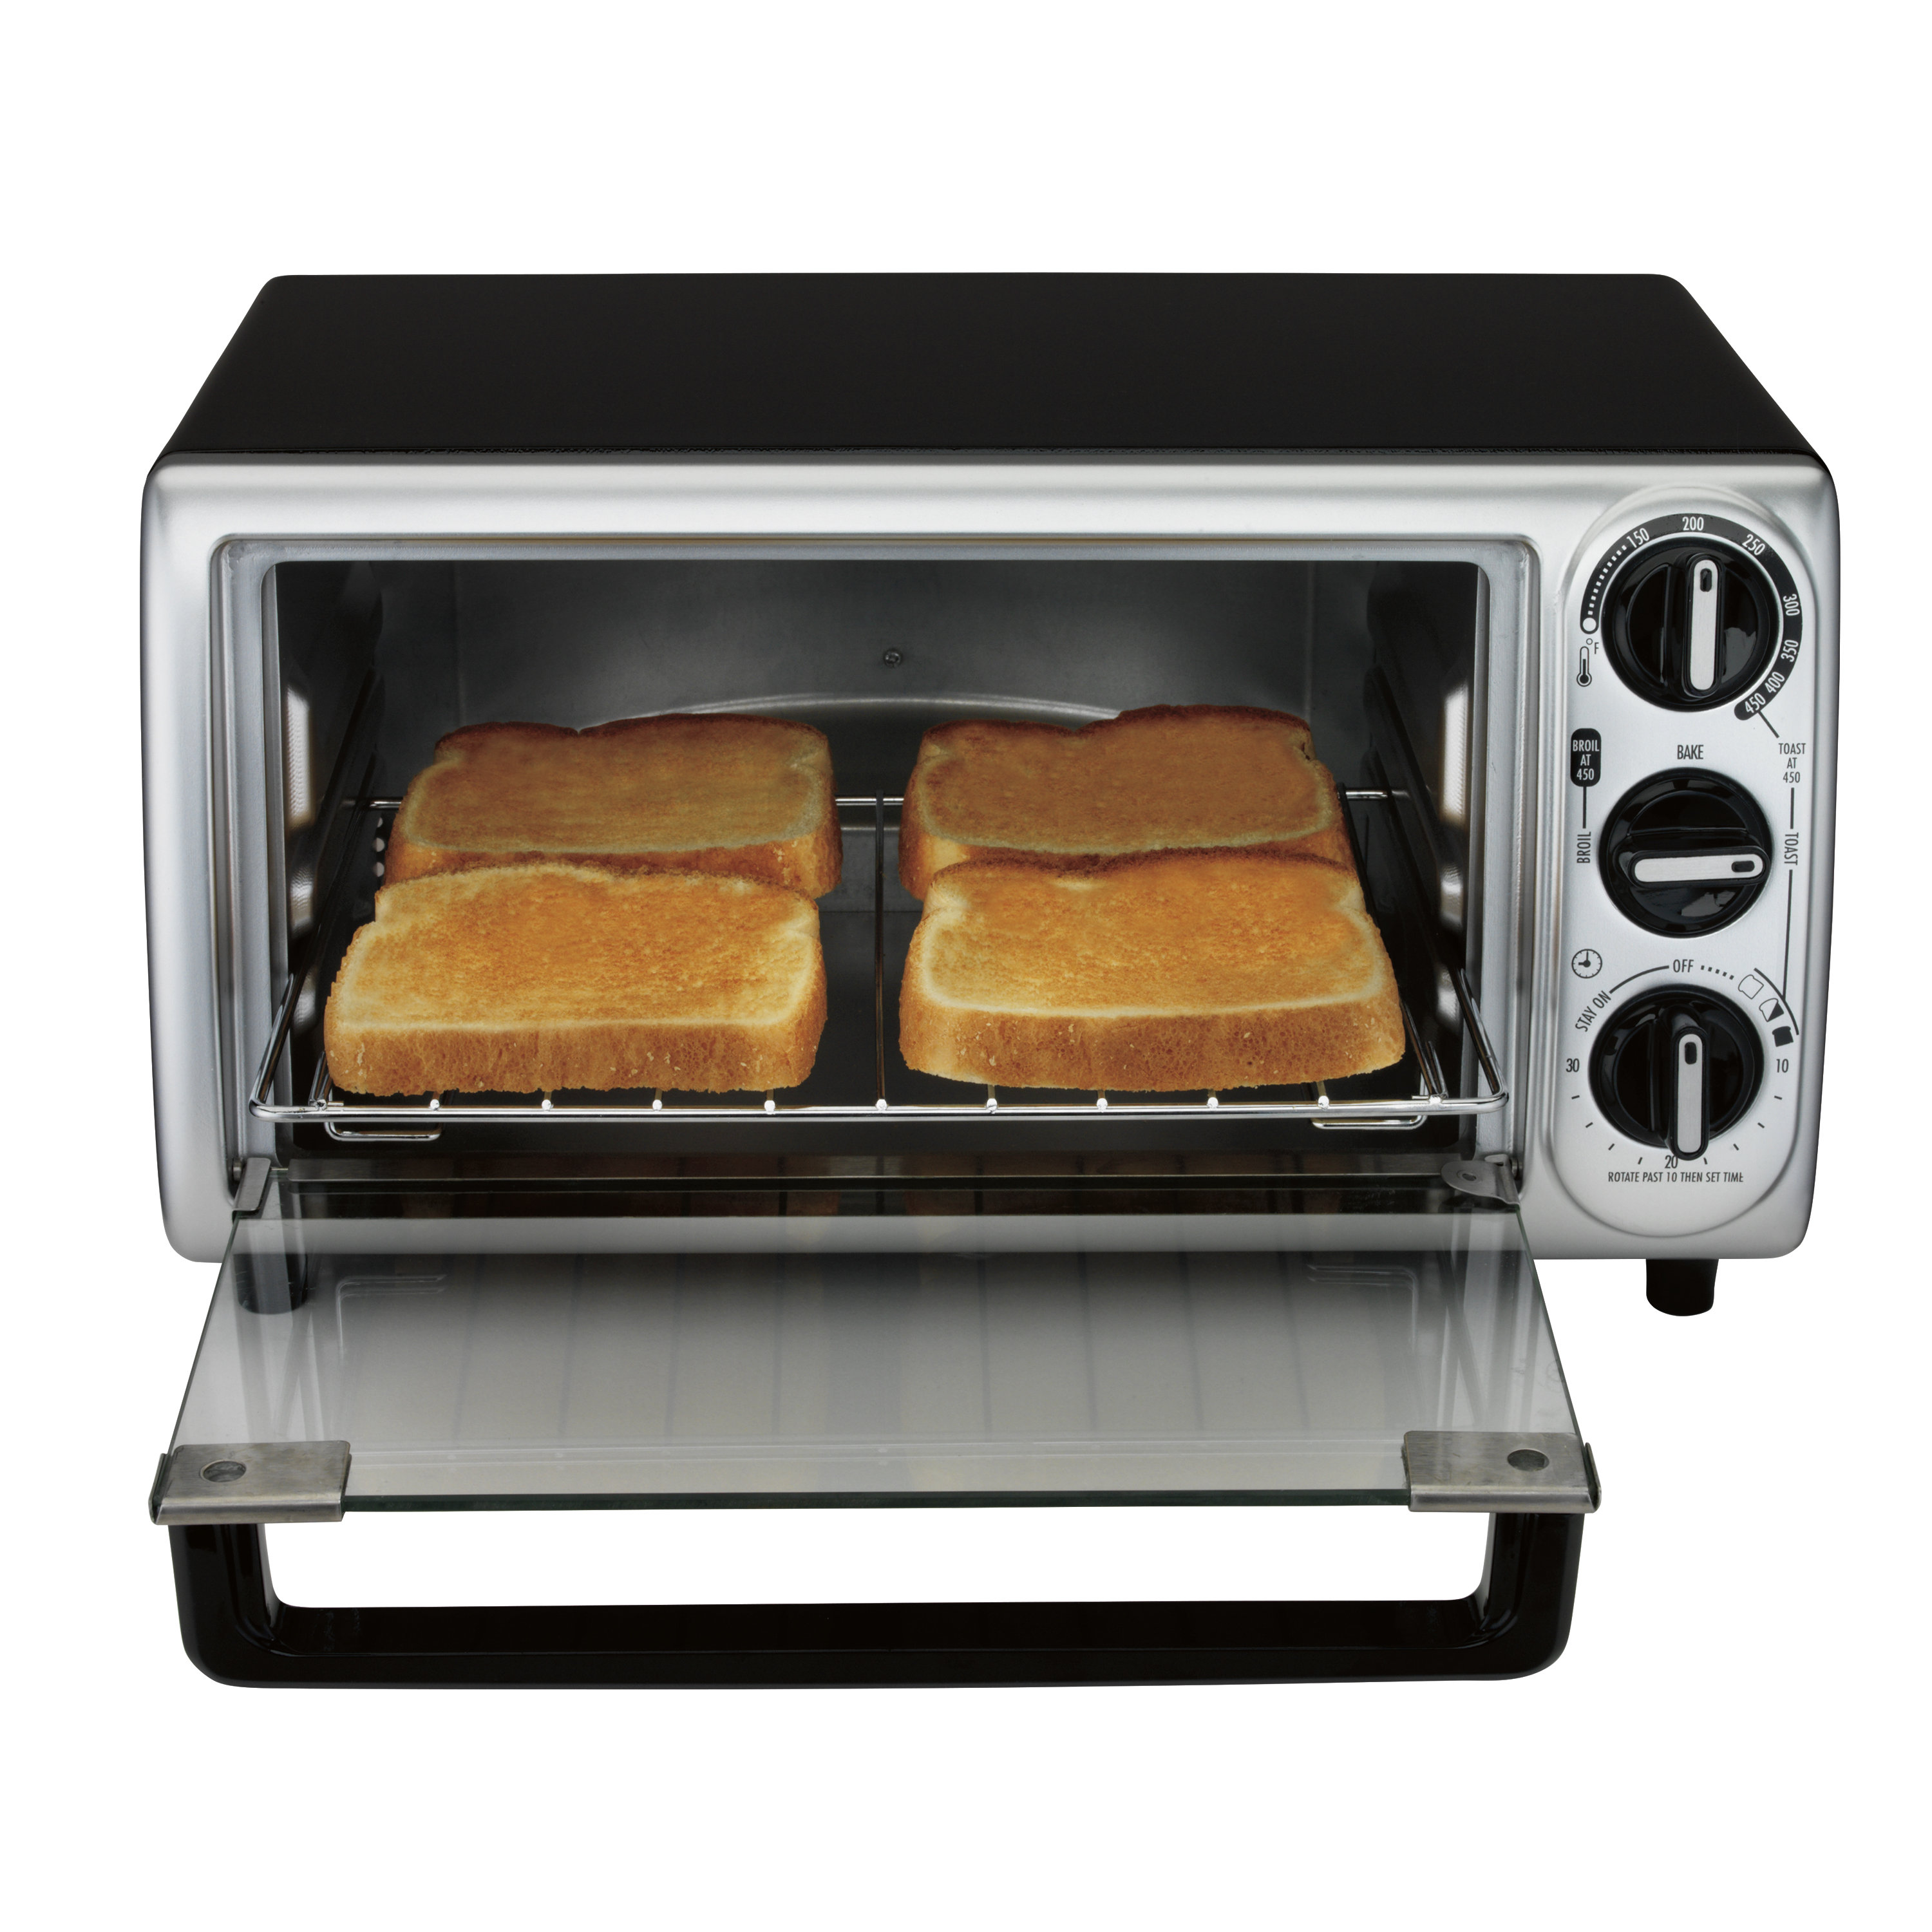 cooks-4-slice-toaster-oven-best-buy